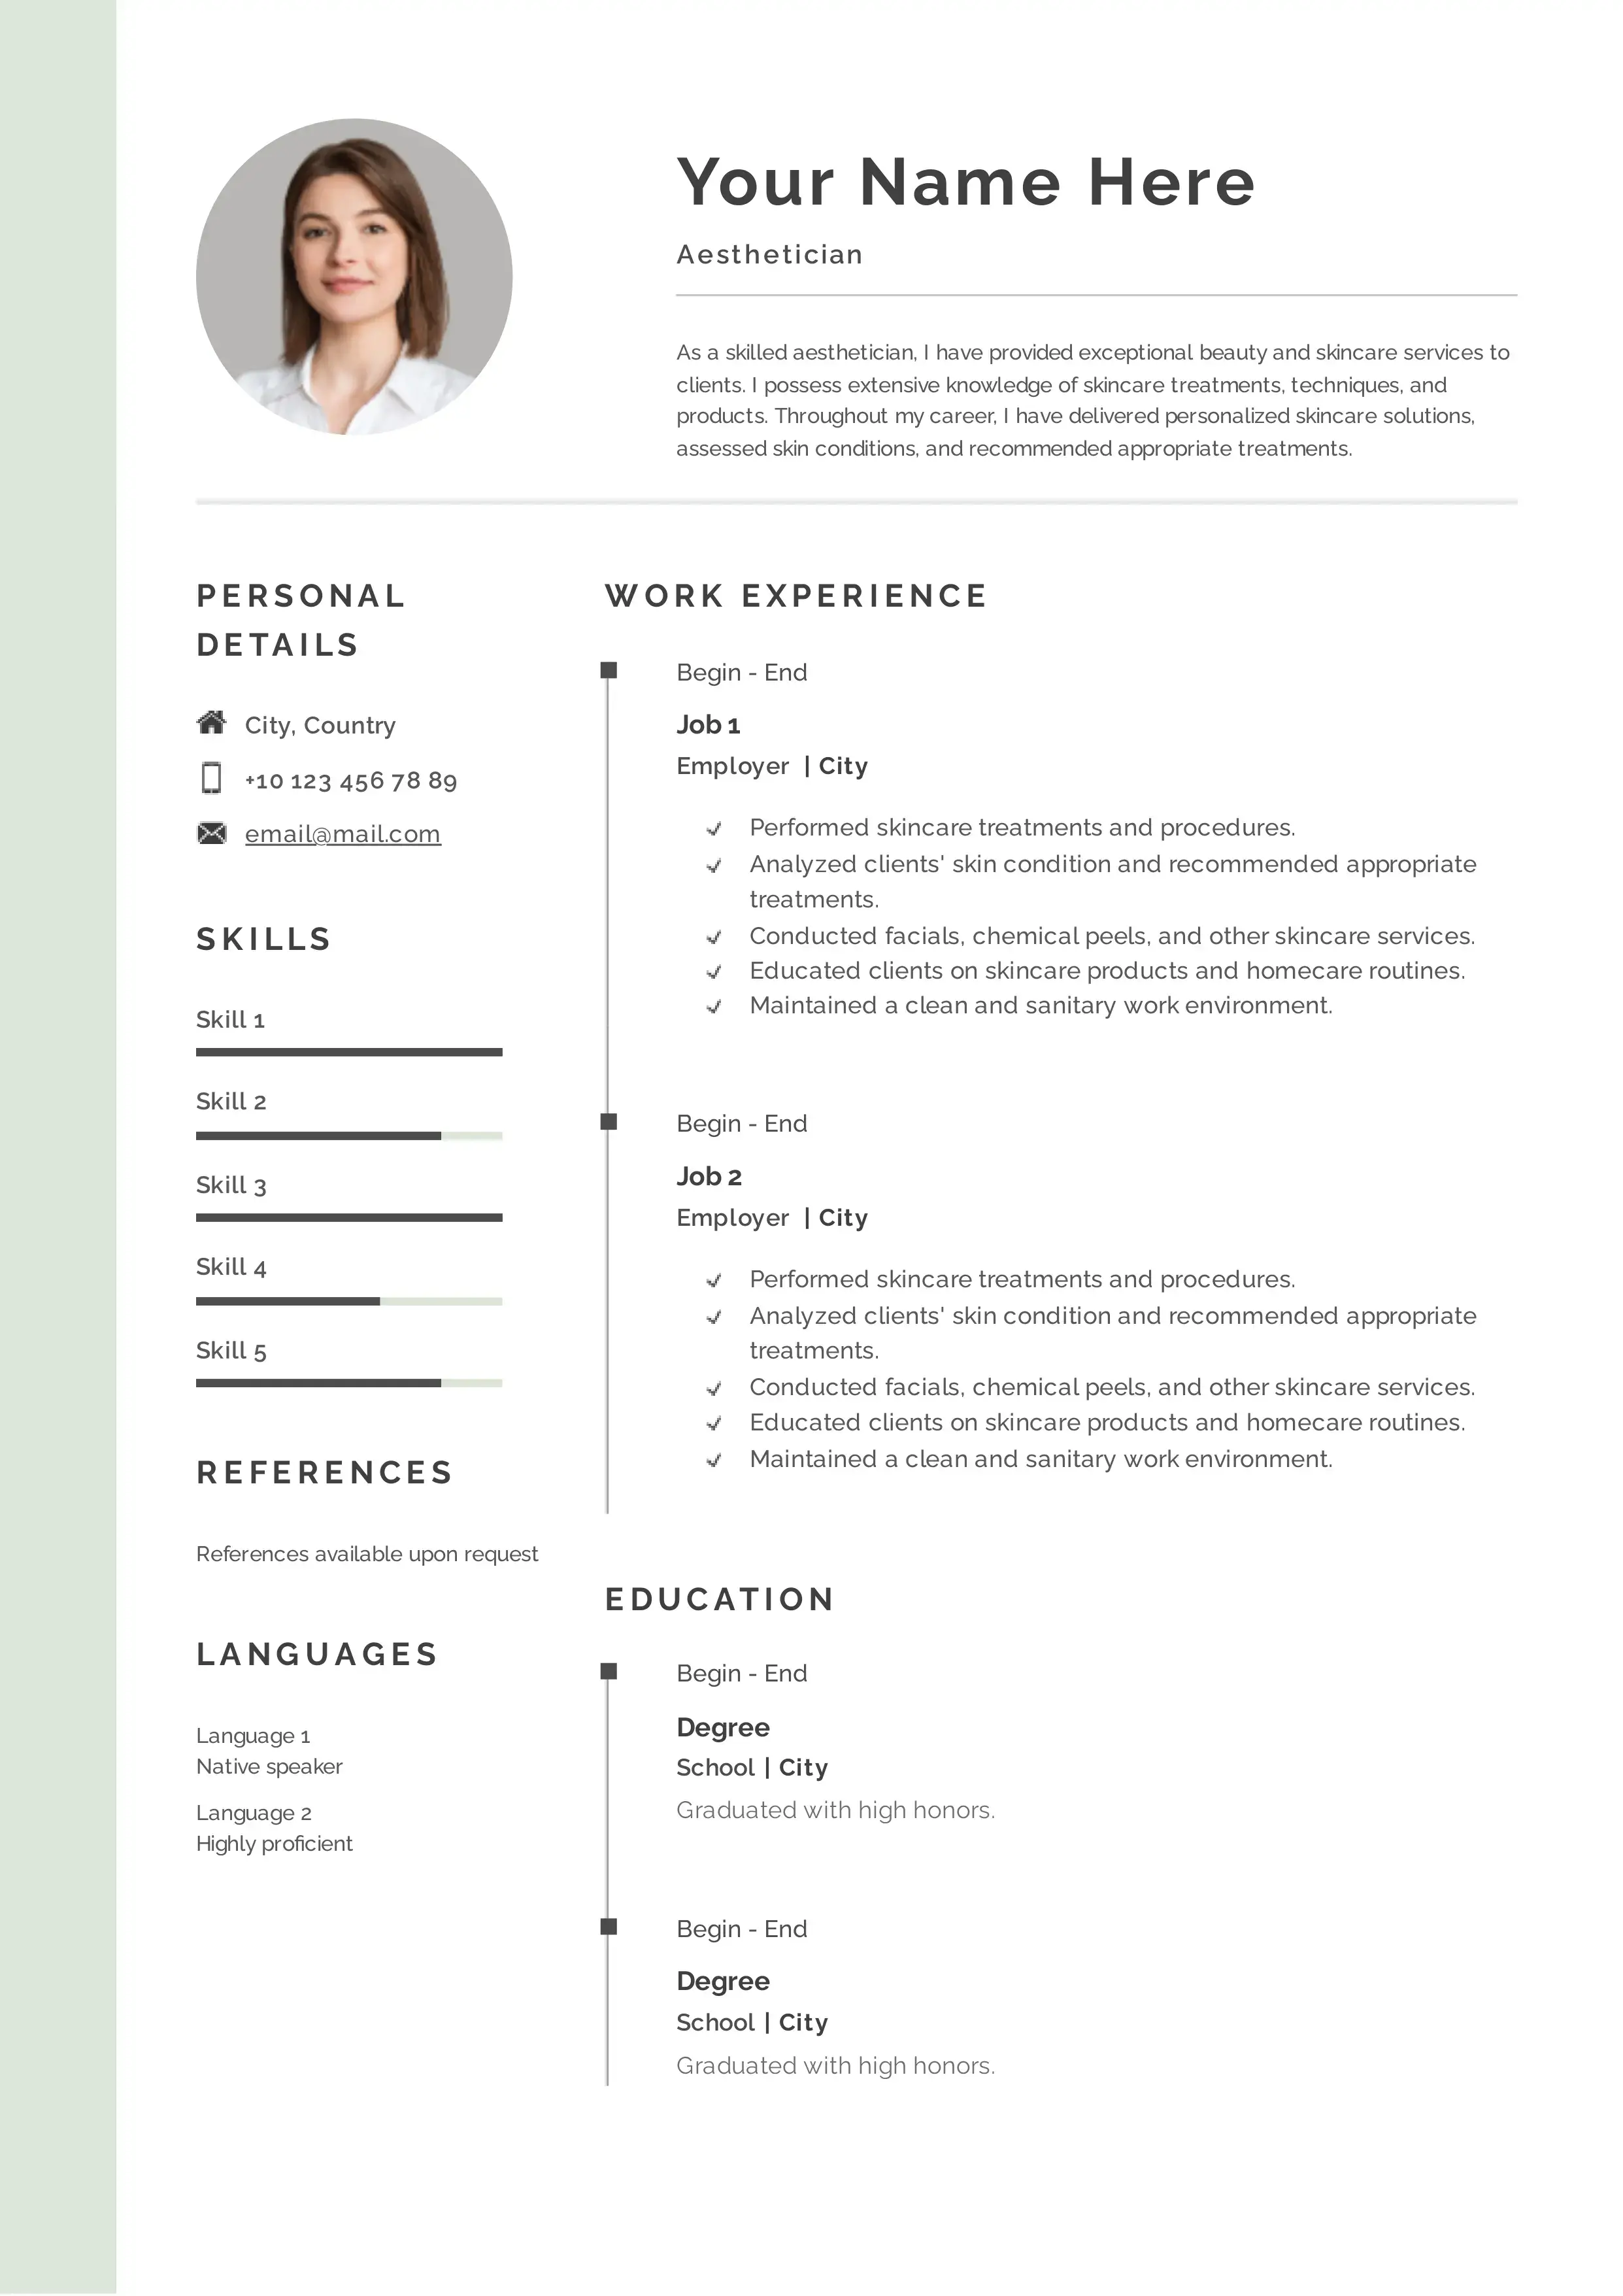 Aesthetician resume CV